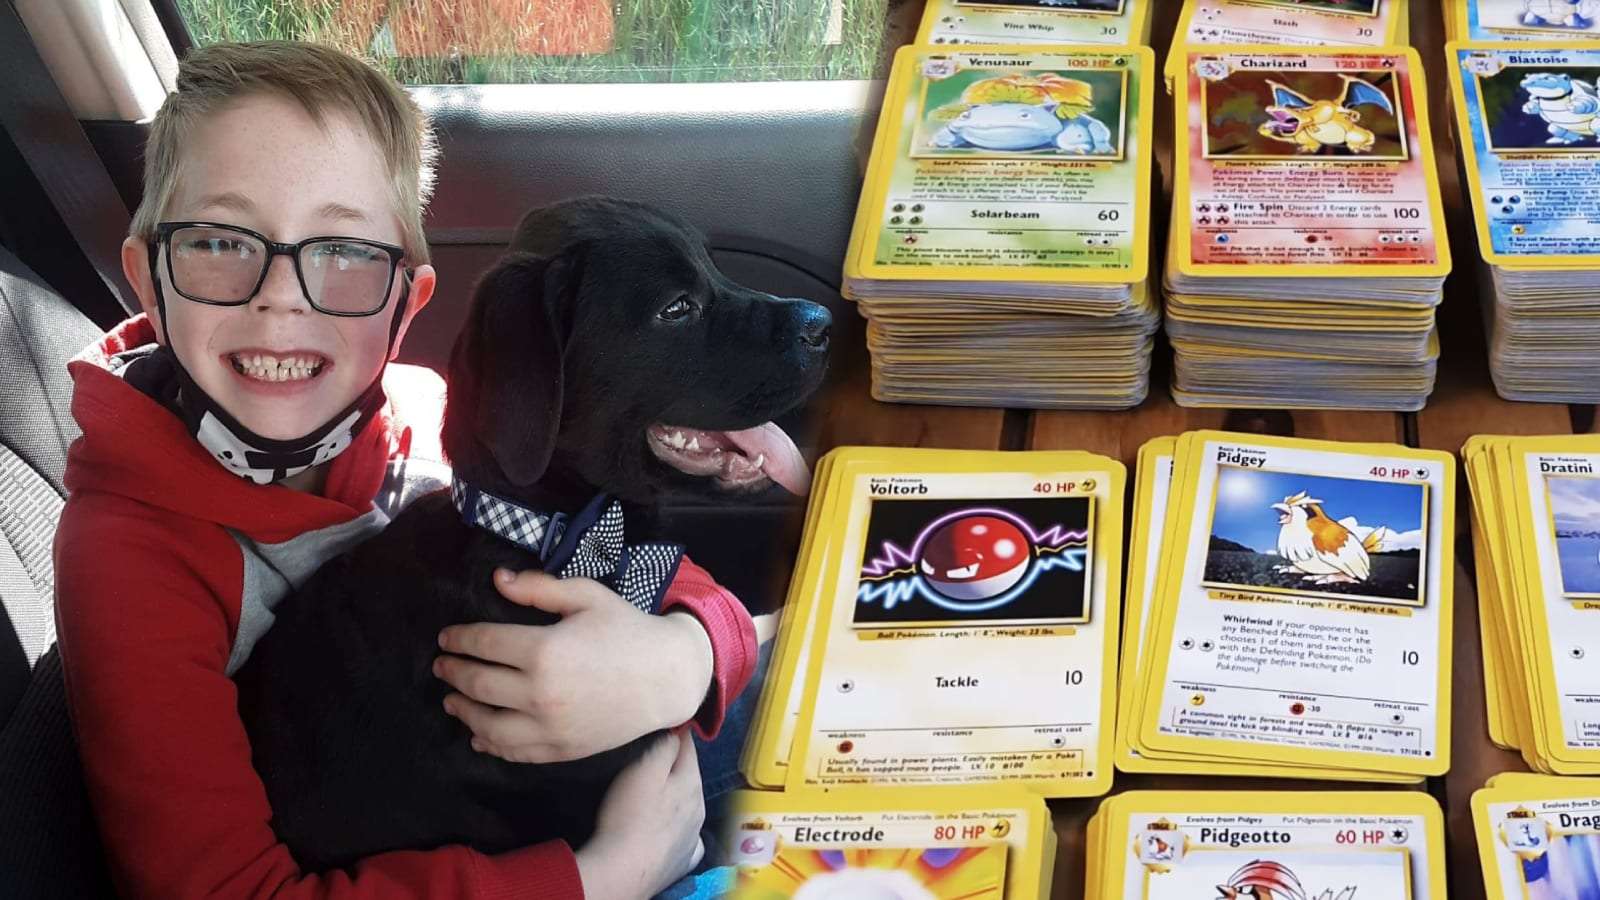 Pokemon fan Bryson Kliemann with his dog next to Pokemon card collection